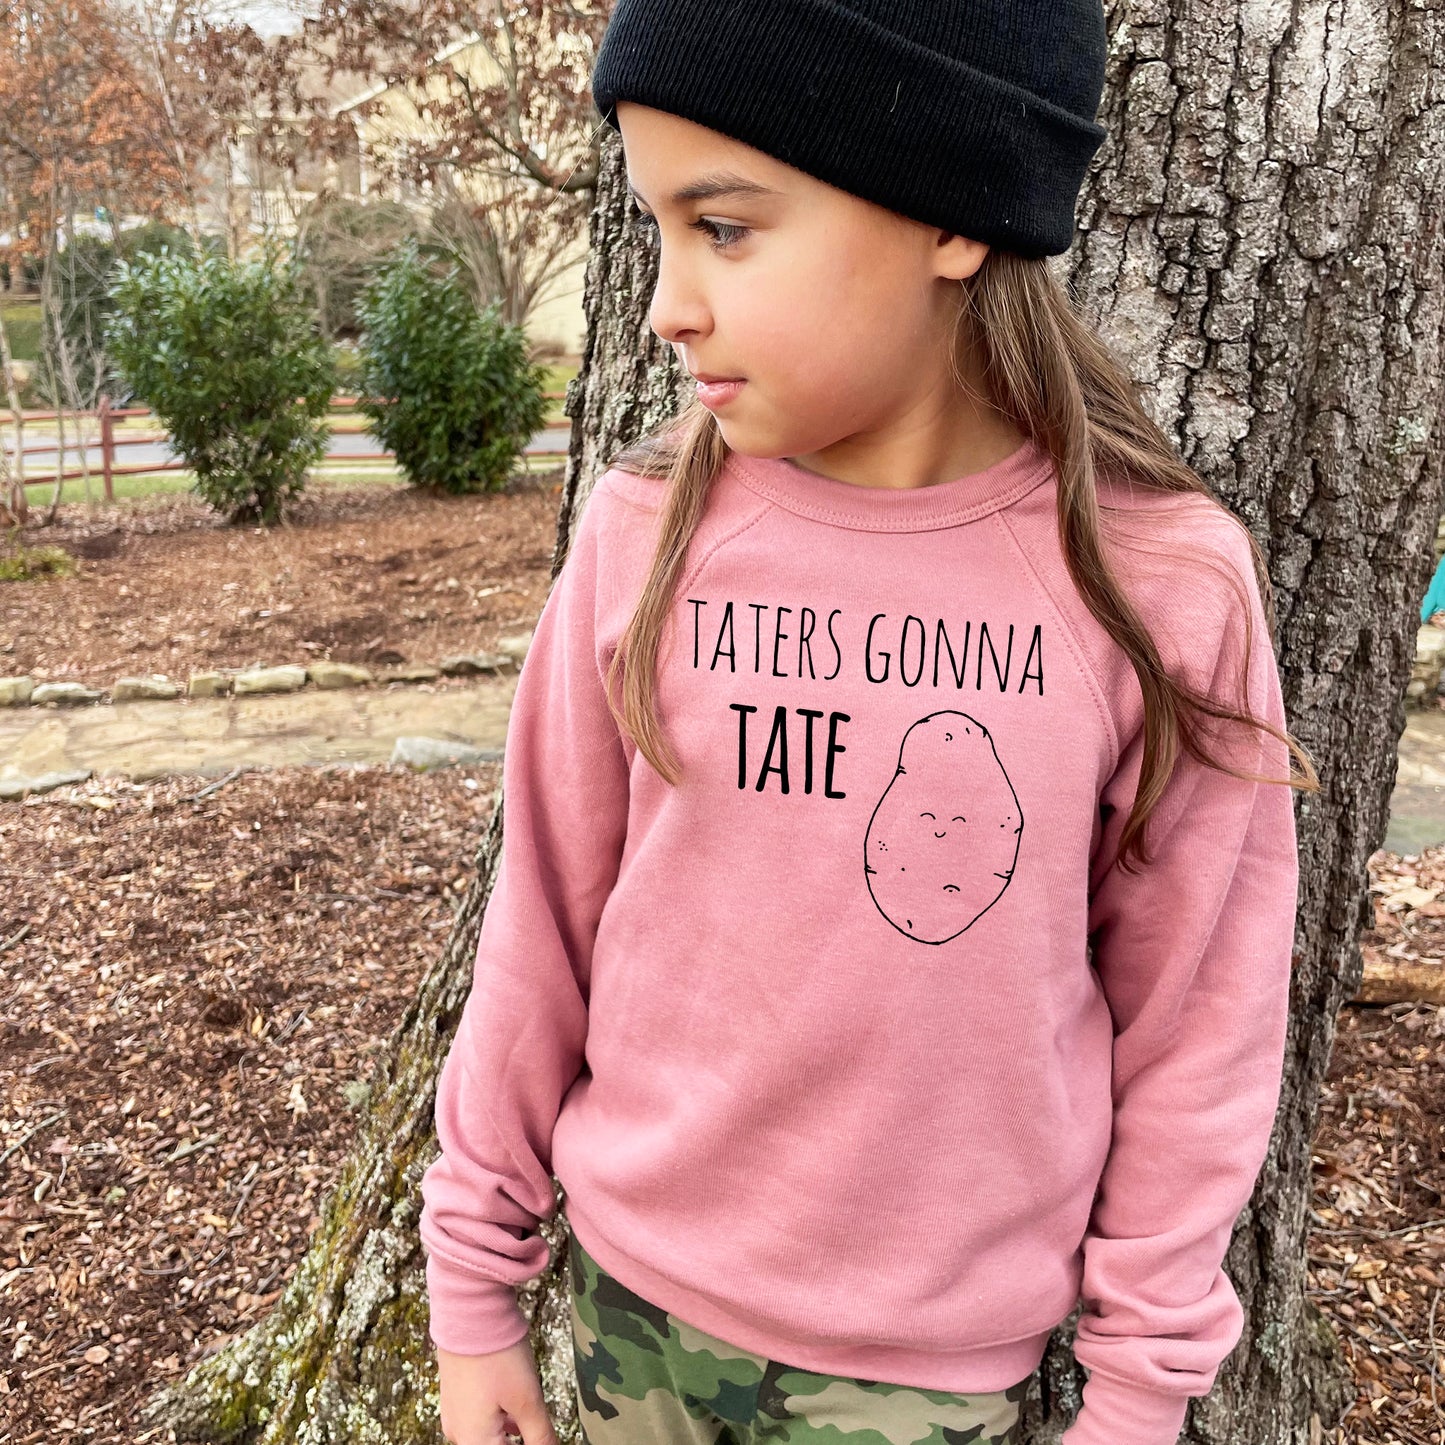 Taters Gonna Tate - Kid's Sweatshirt - Heather Gray or Mauve